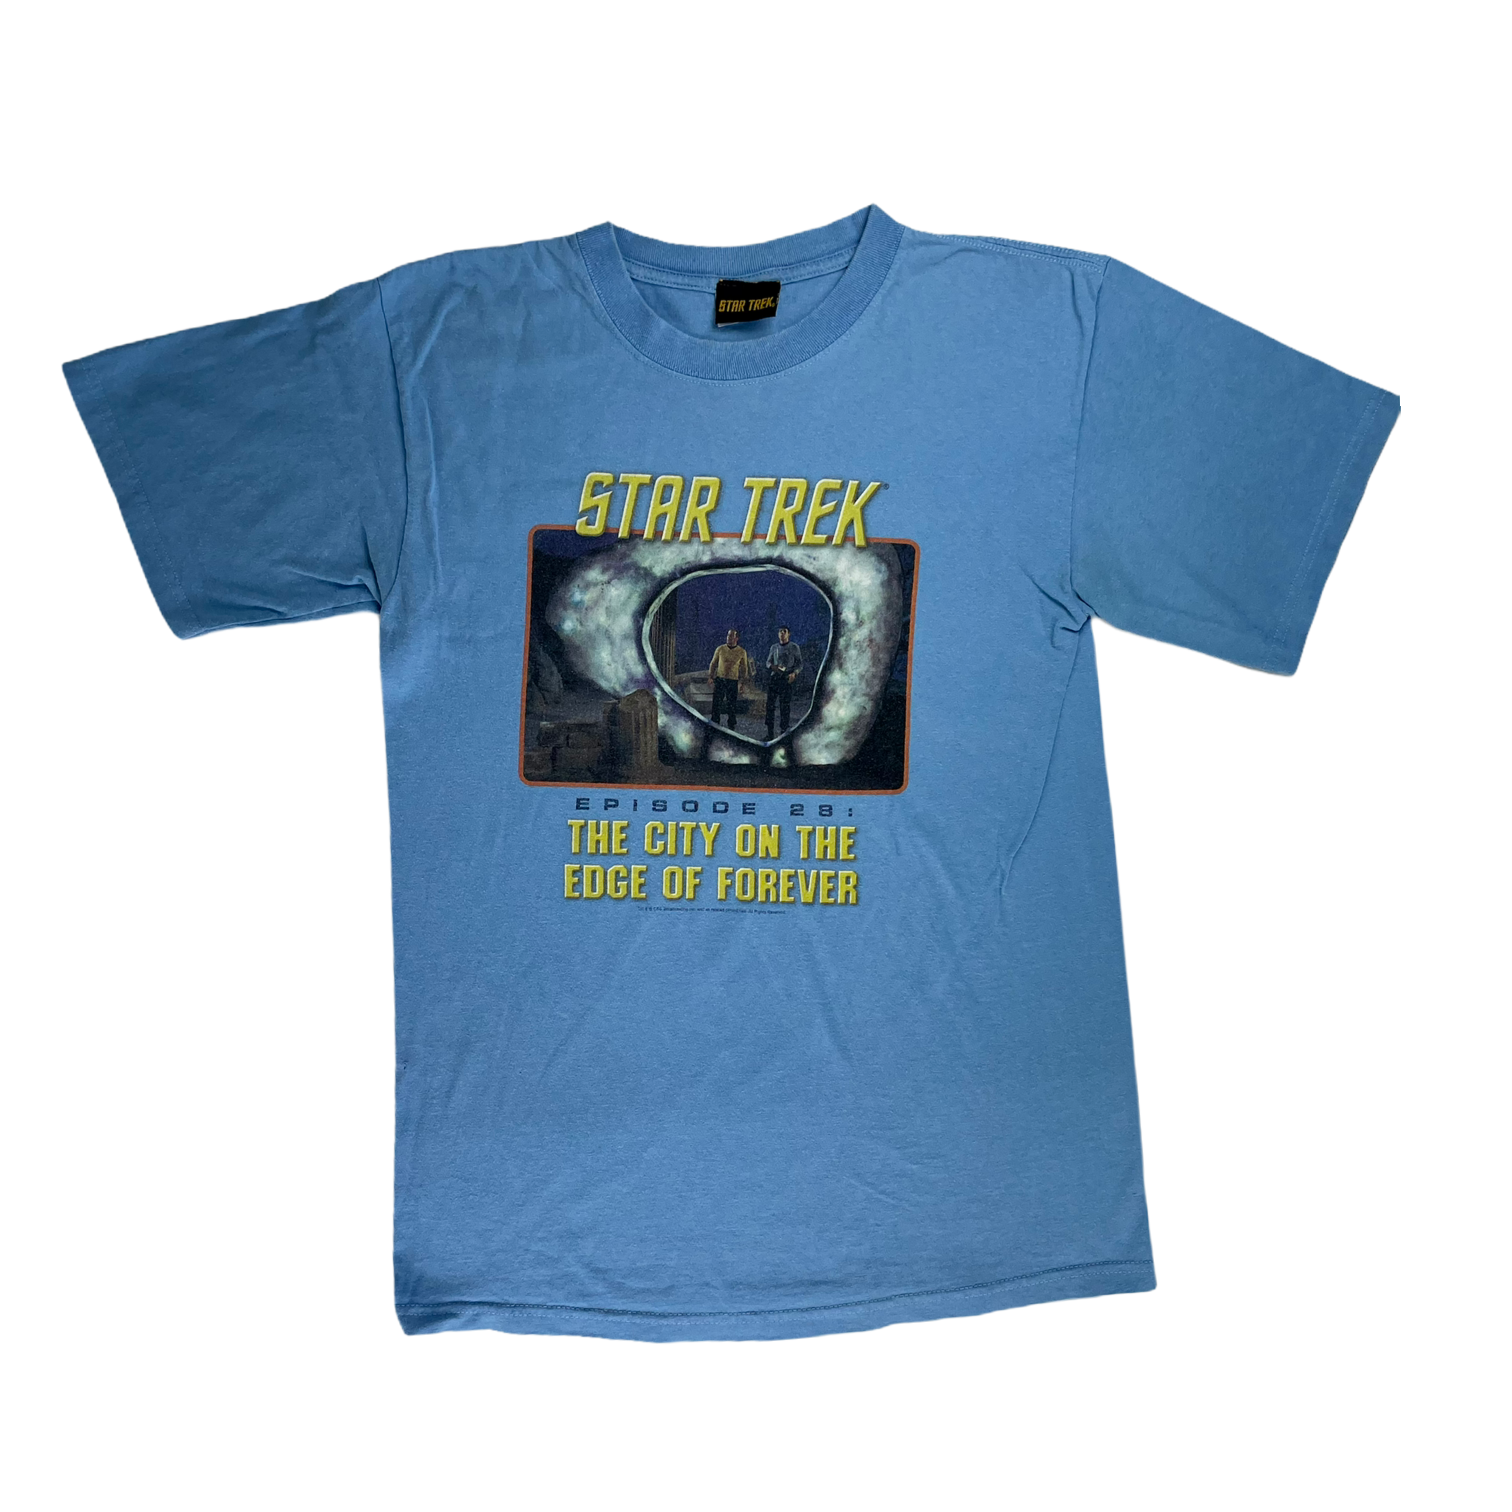 Vintage 90s star trek T-shirt. - Restorecph